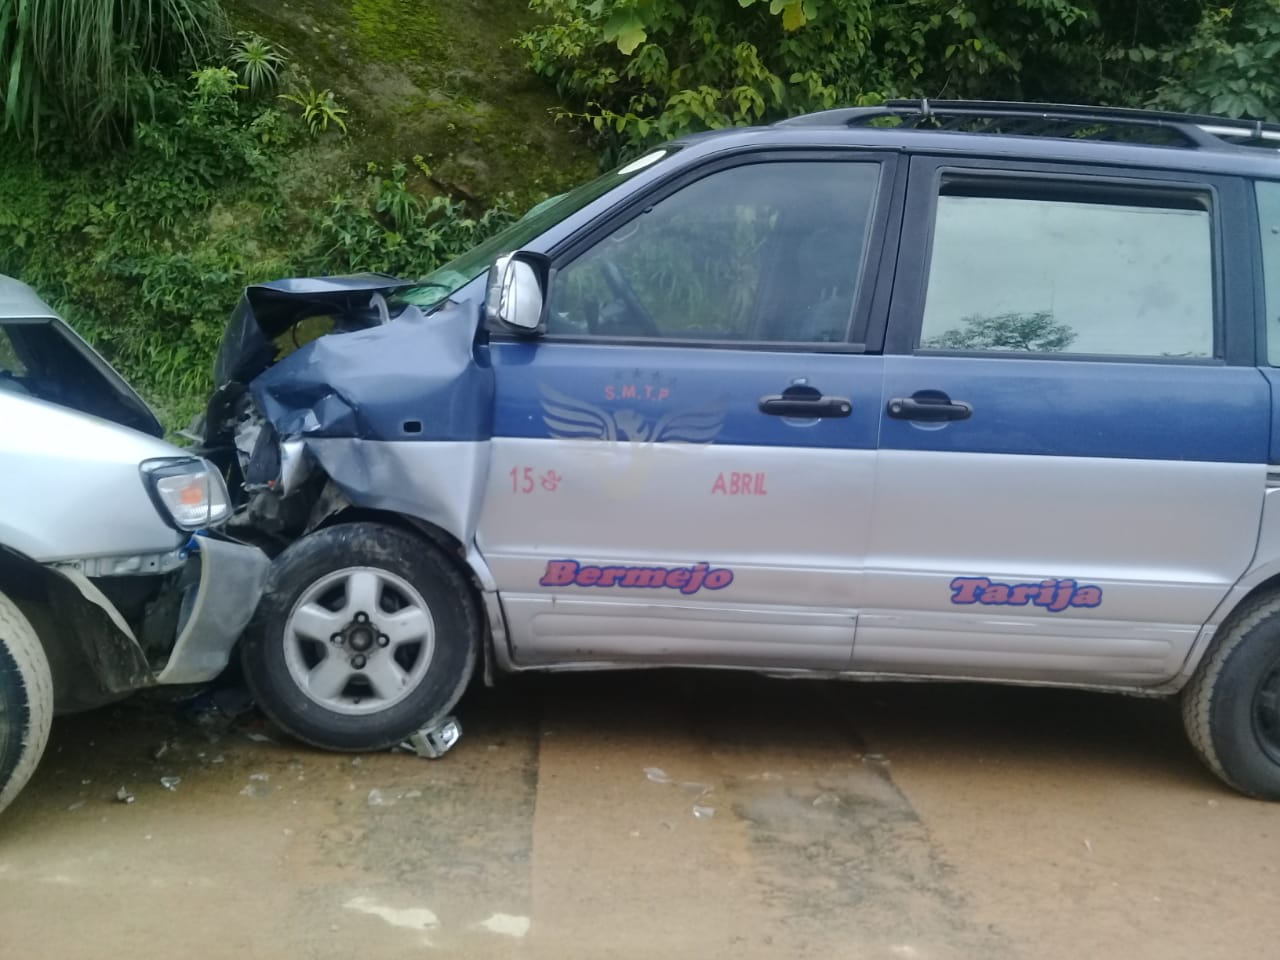 Damian Castillo sufre un accidente en la carretera Bermejo-Tarija